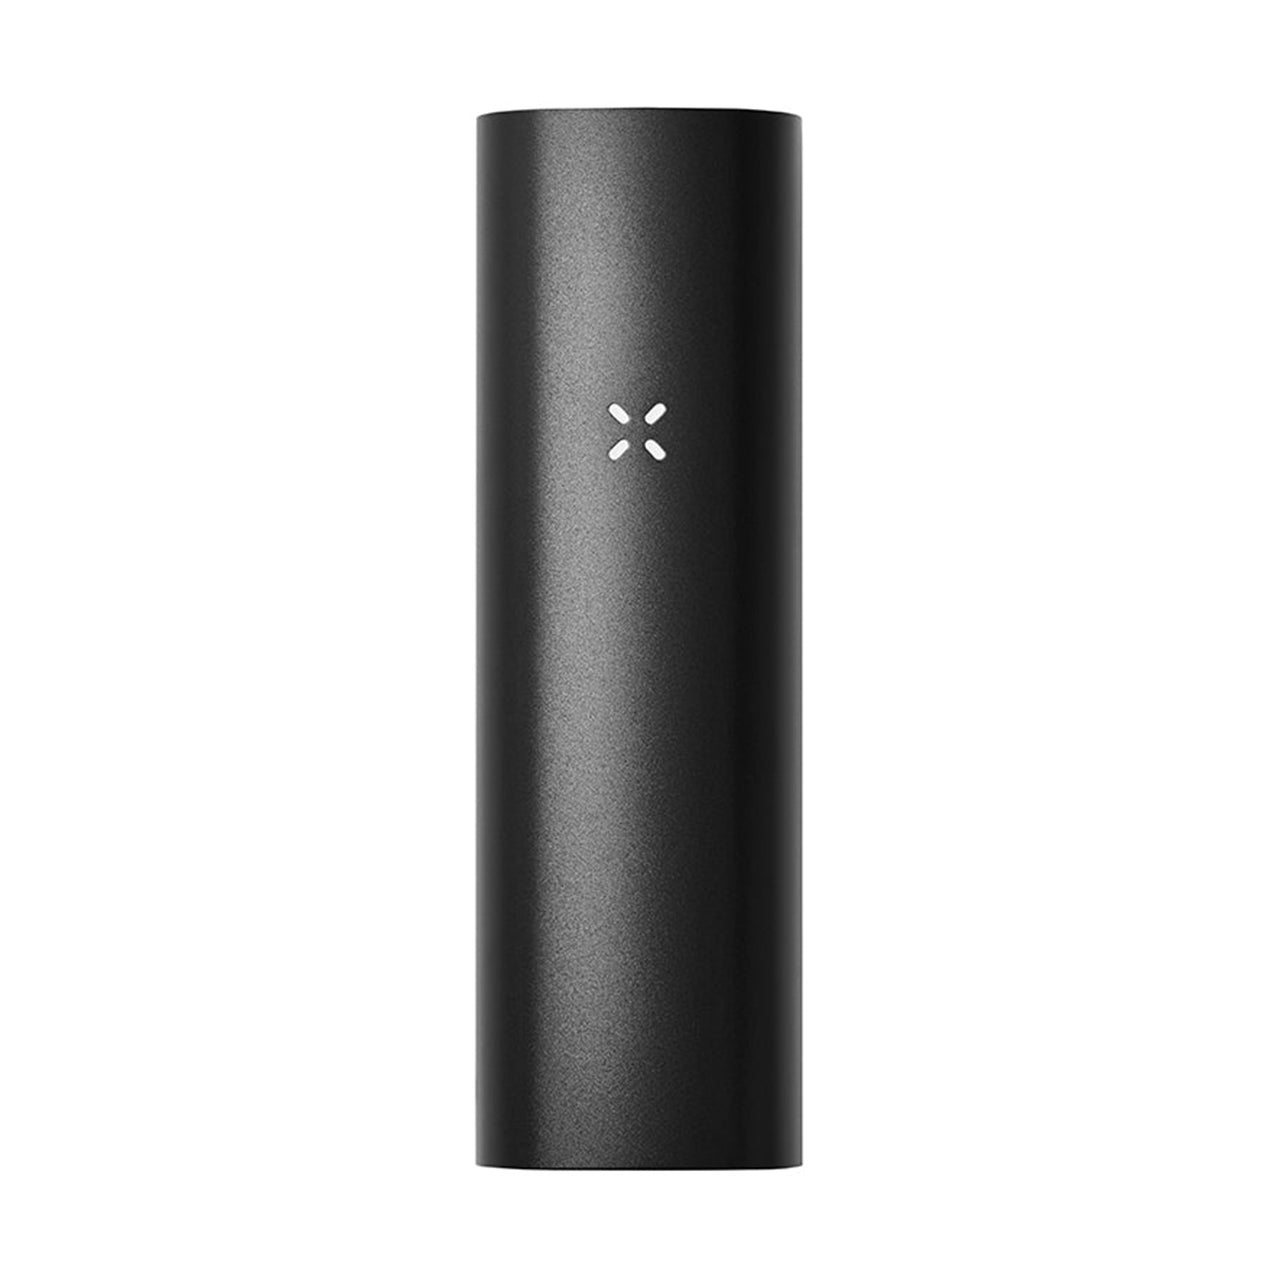 pax 3 vaporizer onyx black